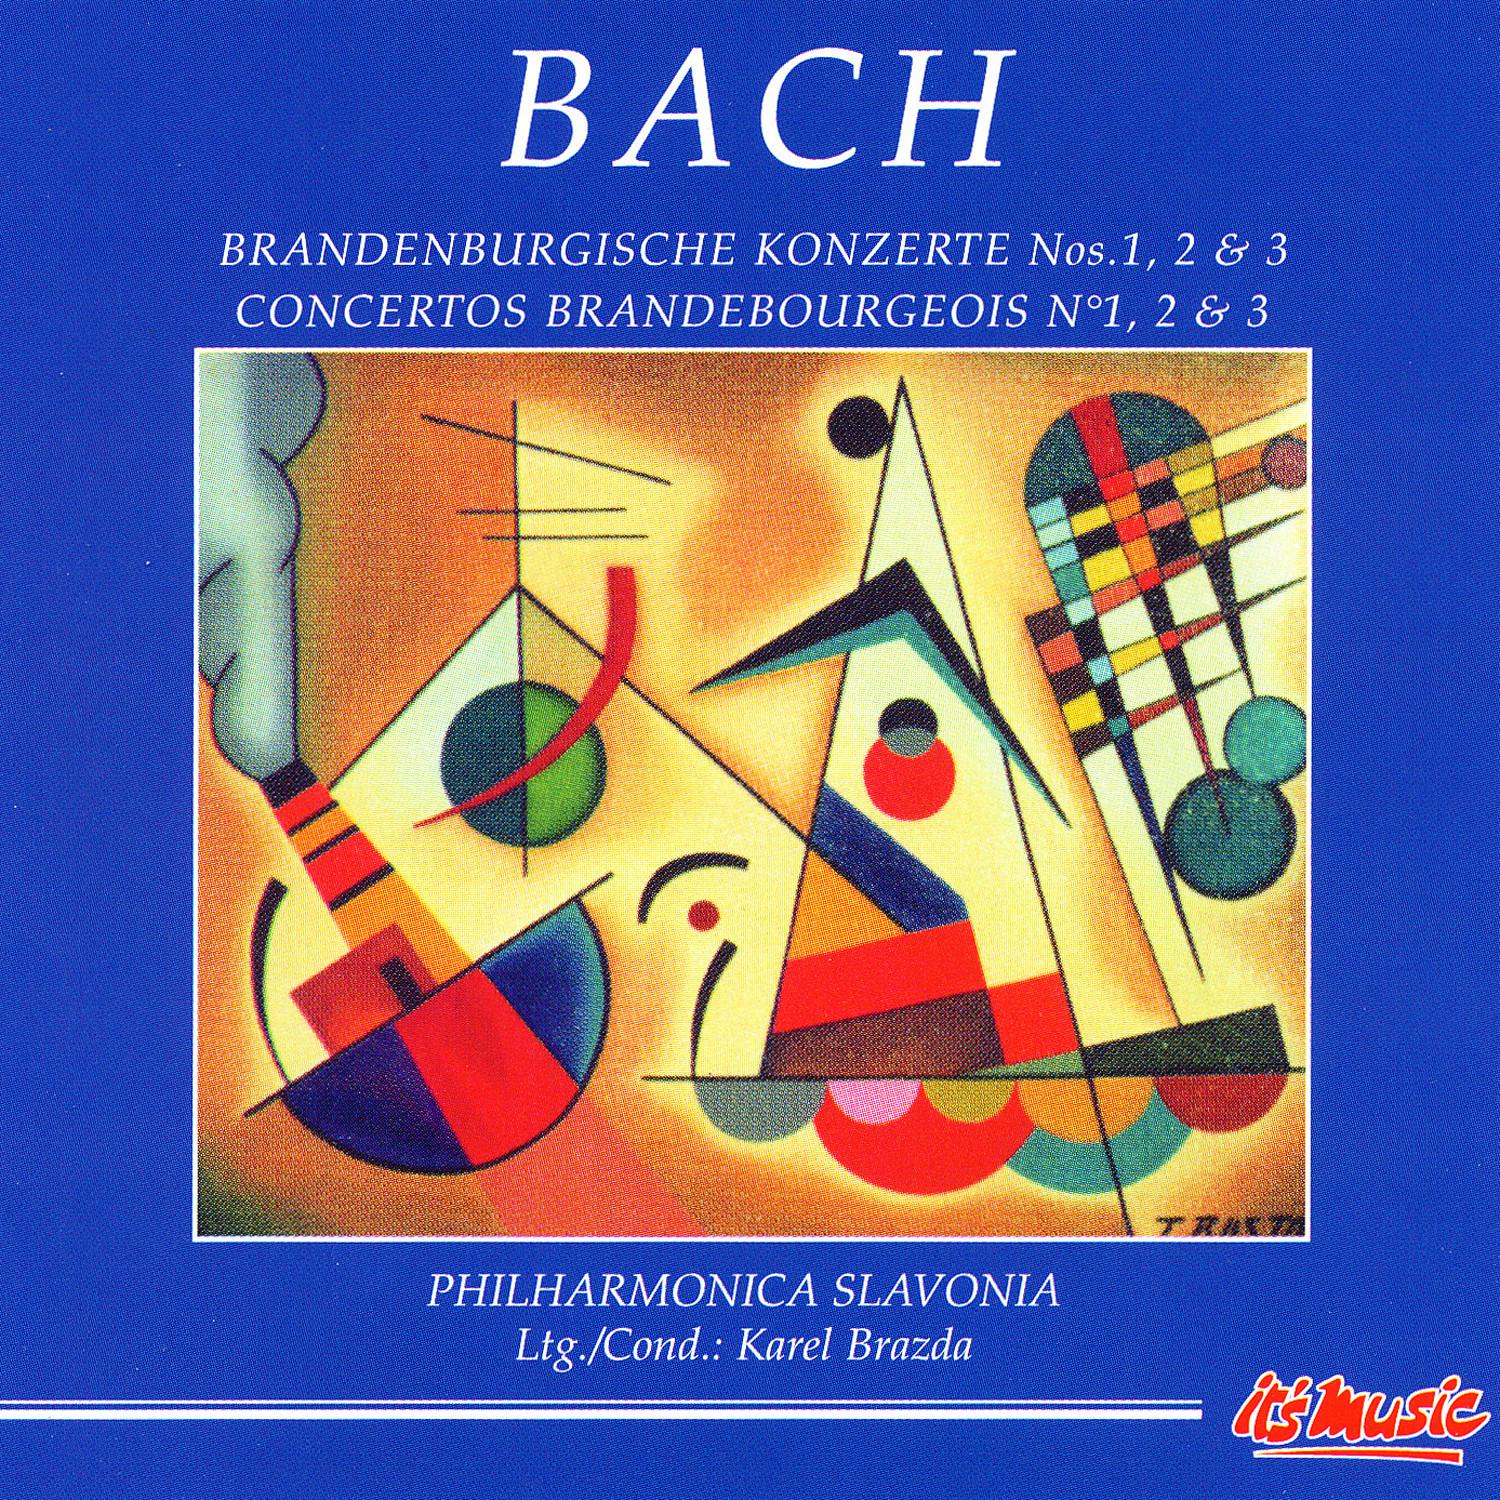 Brandenburg Concerto No. 2 in F major III. Allegro Assai